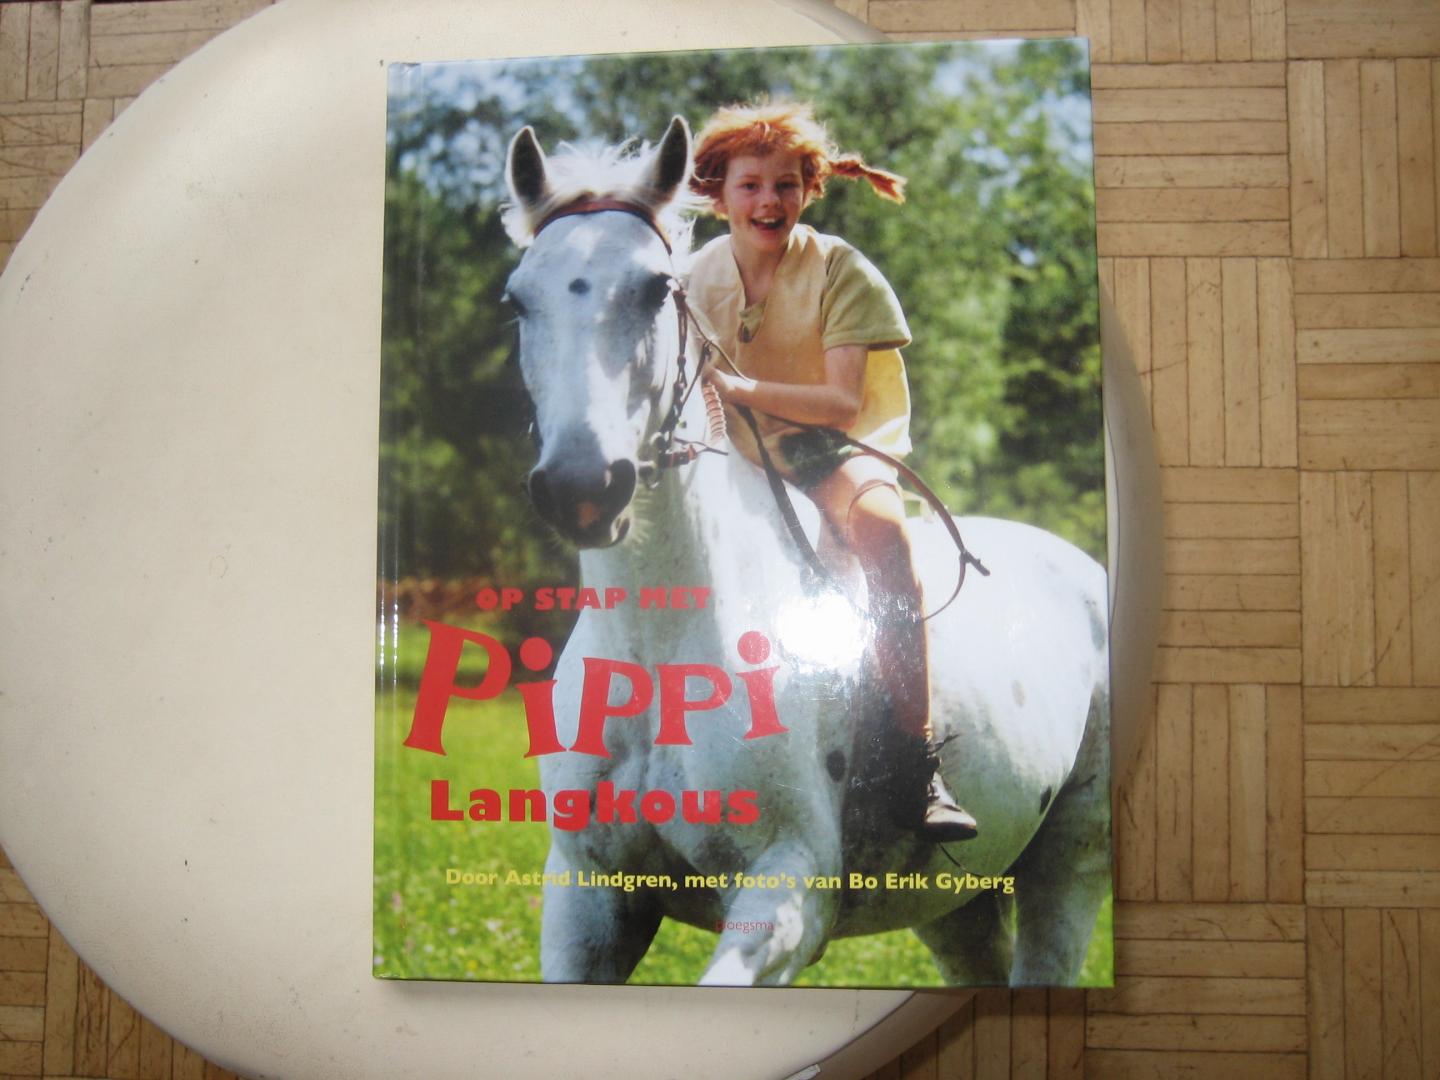 Astrid Lindgren - Op stap met Pippi Langkous